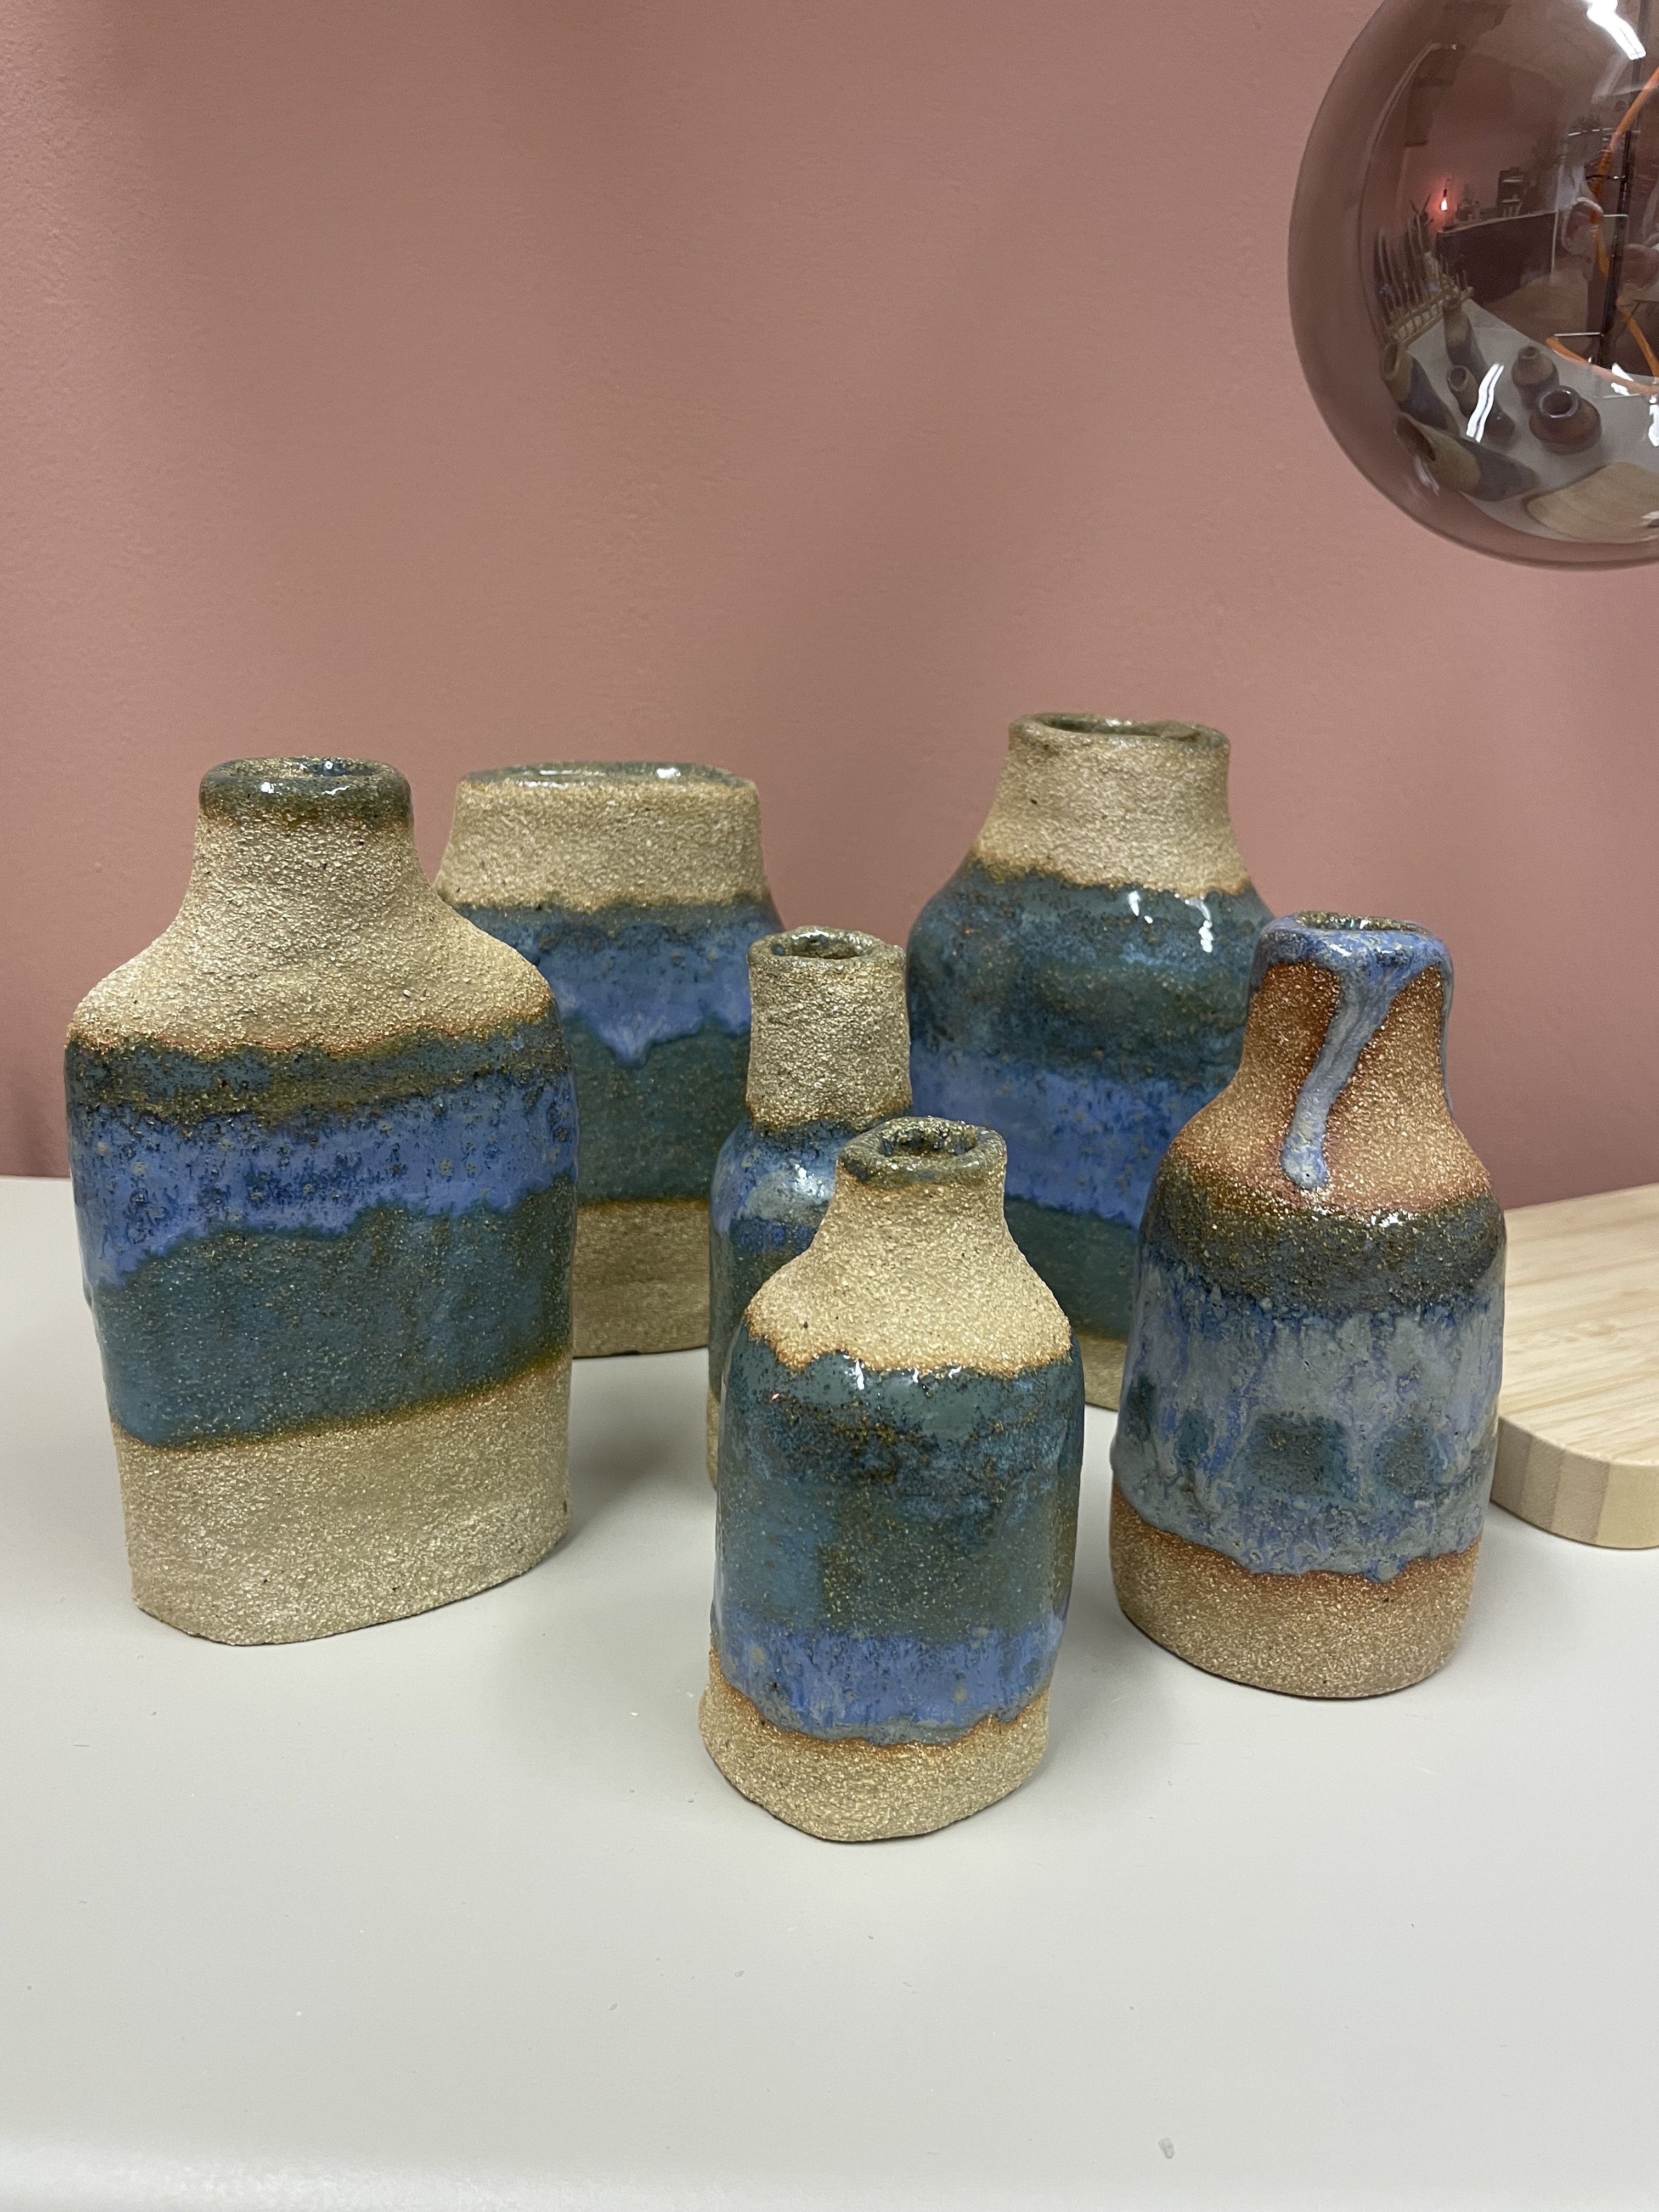 Rustic Coiled bottle vases workshop - 
suitable for beginners 